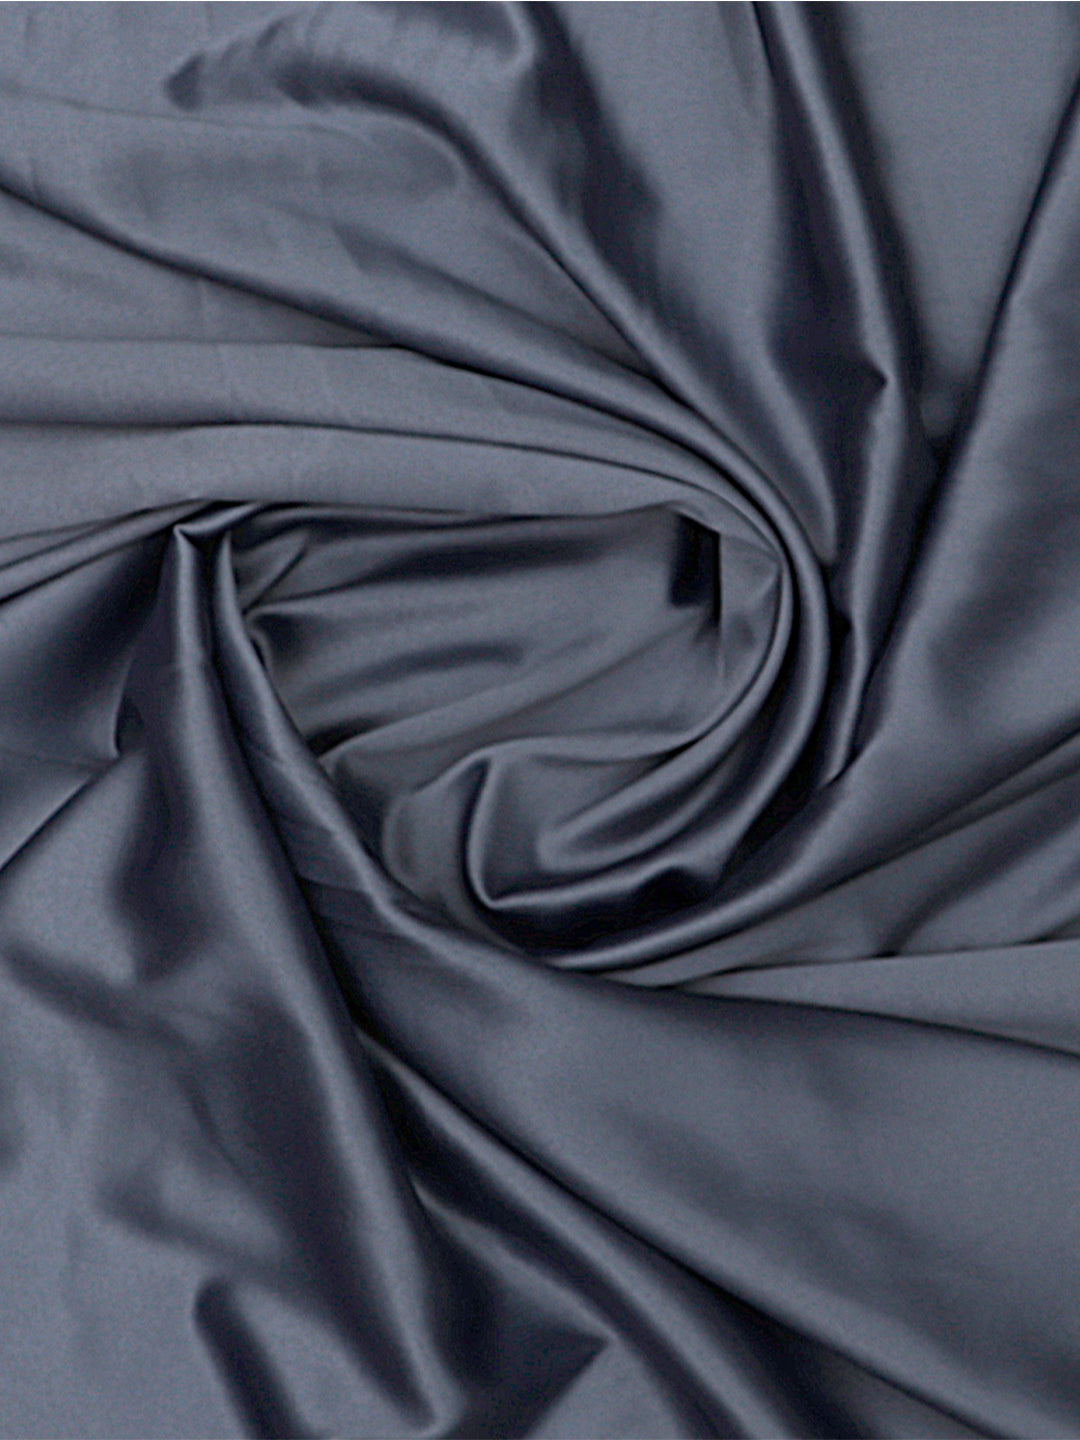 Dark Grey Plain Imported Satin Fabric